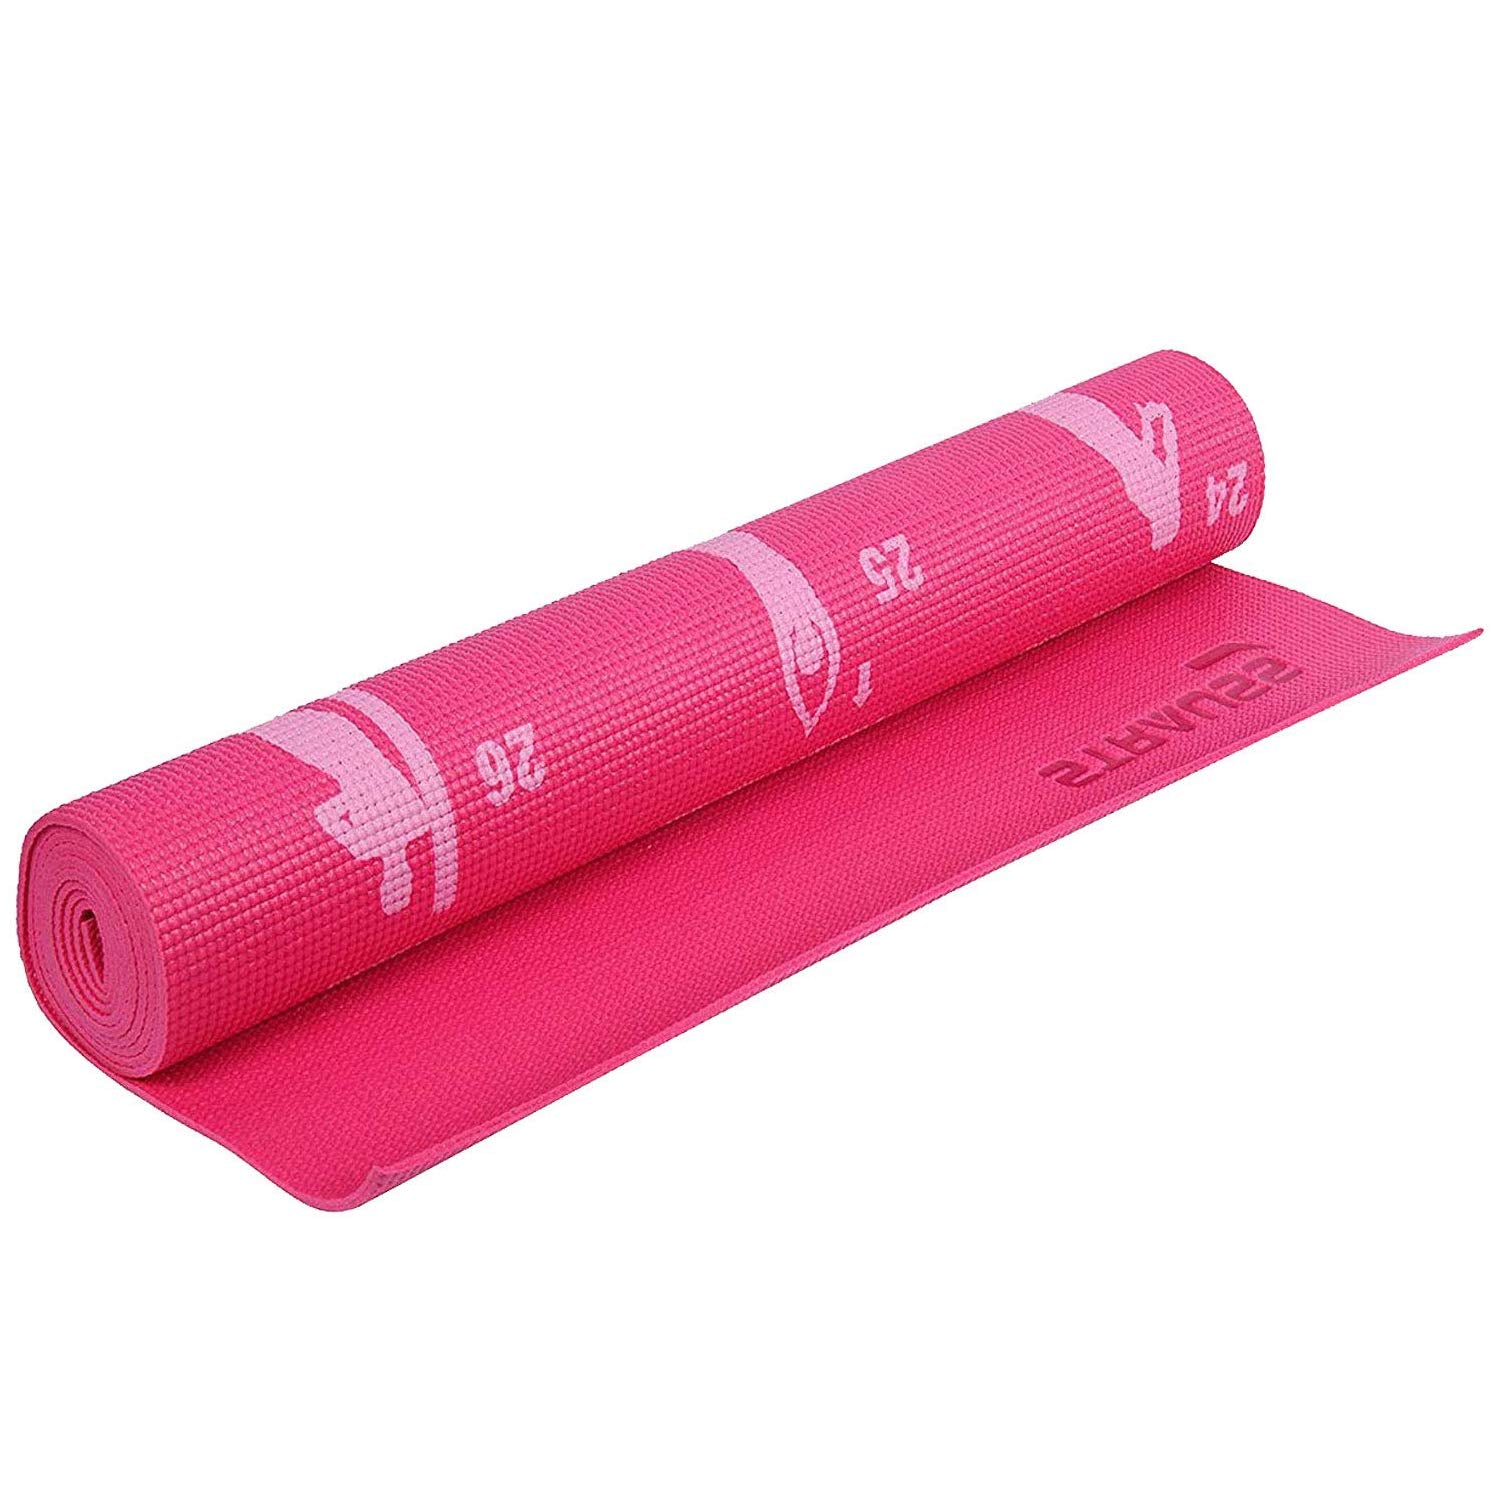 Strauss Yoga Mat (Yogasana), Exercise mat